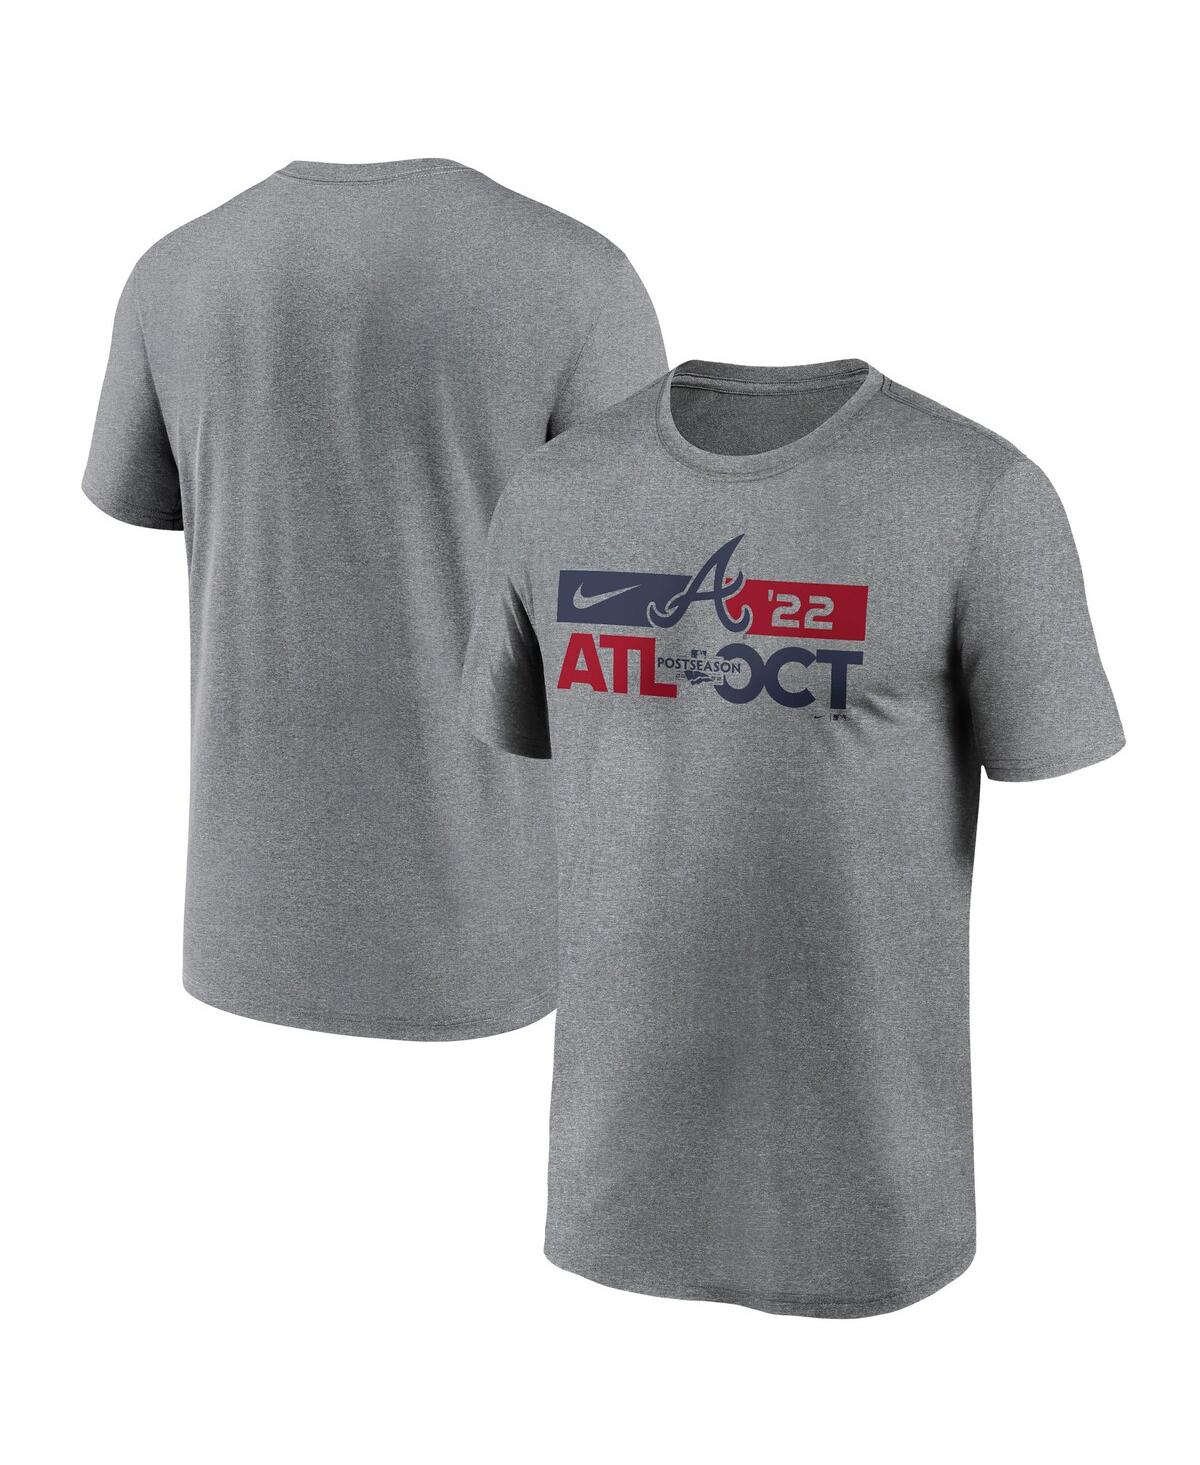 Men's Nike Heather Charcoal Atlanta Braves 2022 Postseason T-shirt